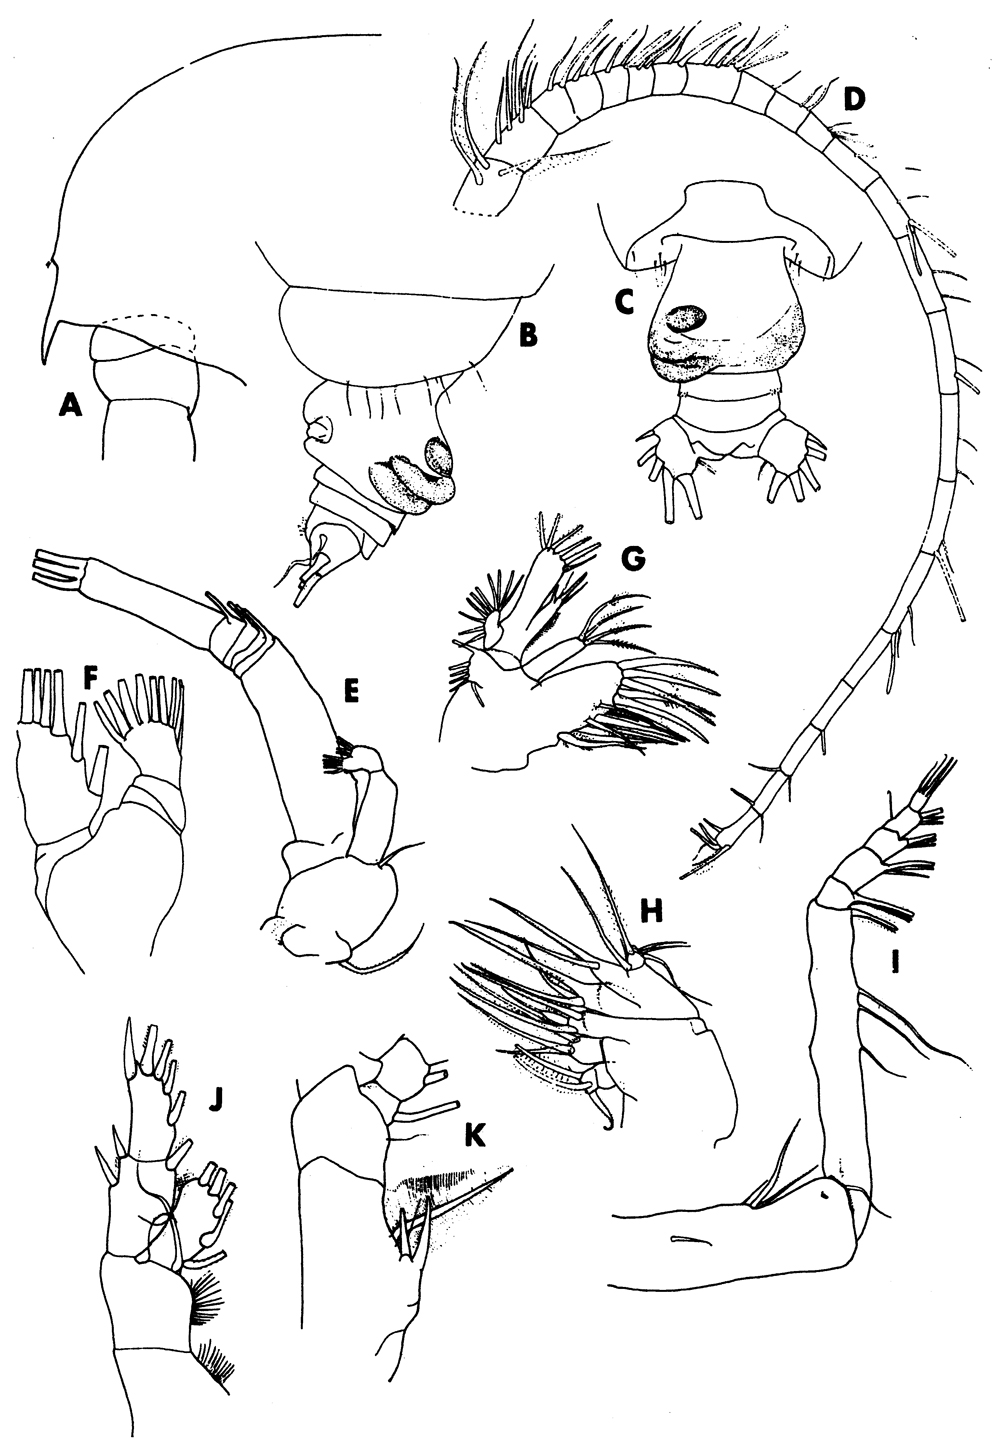 Species Euchirella formosa - Plate 10 of morphological figures